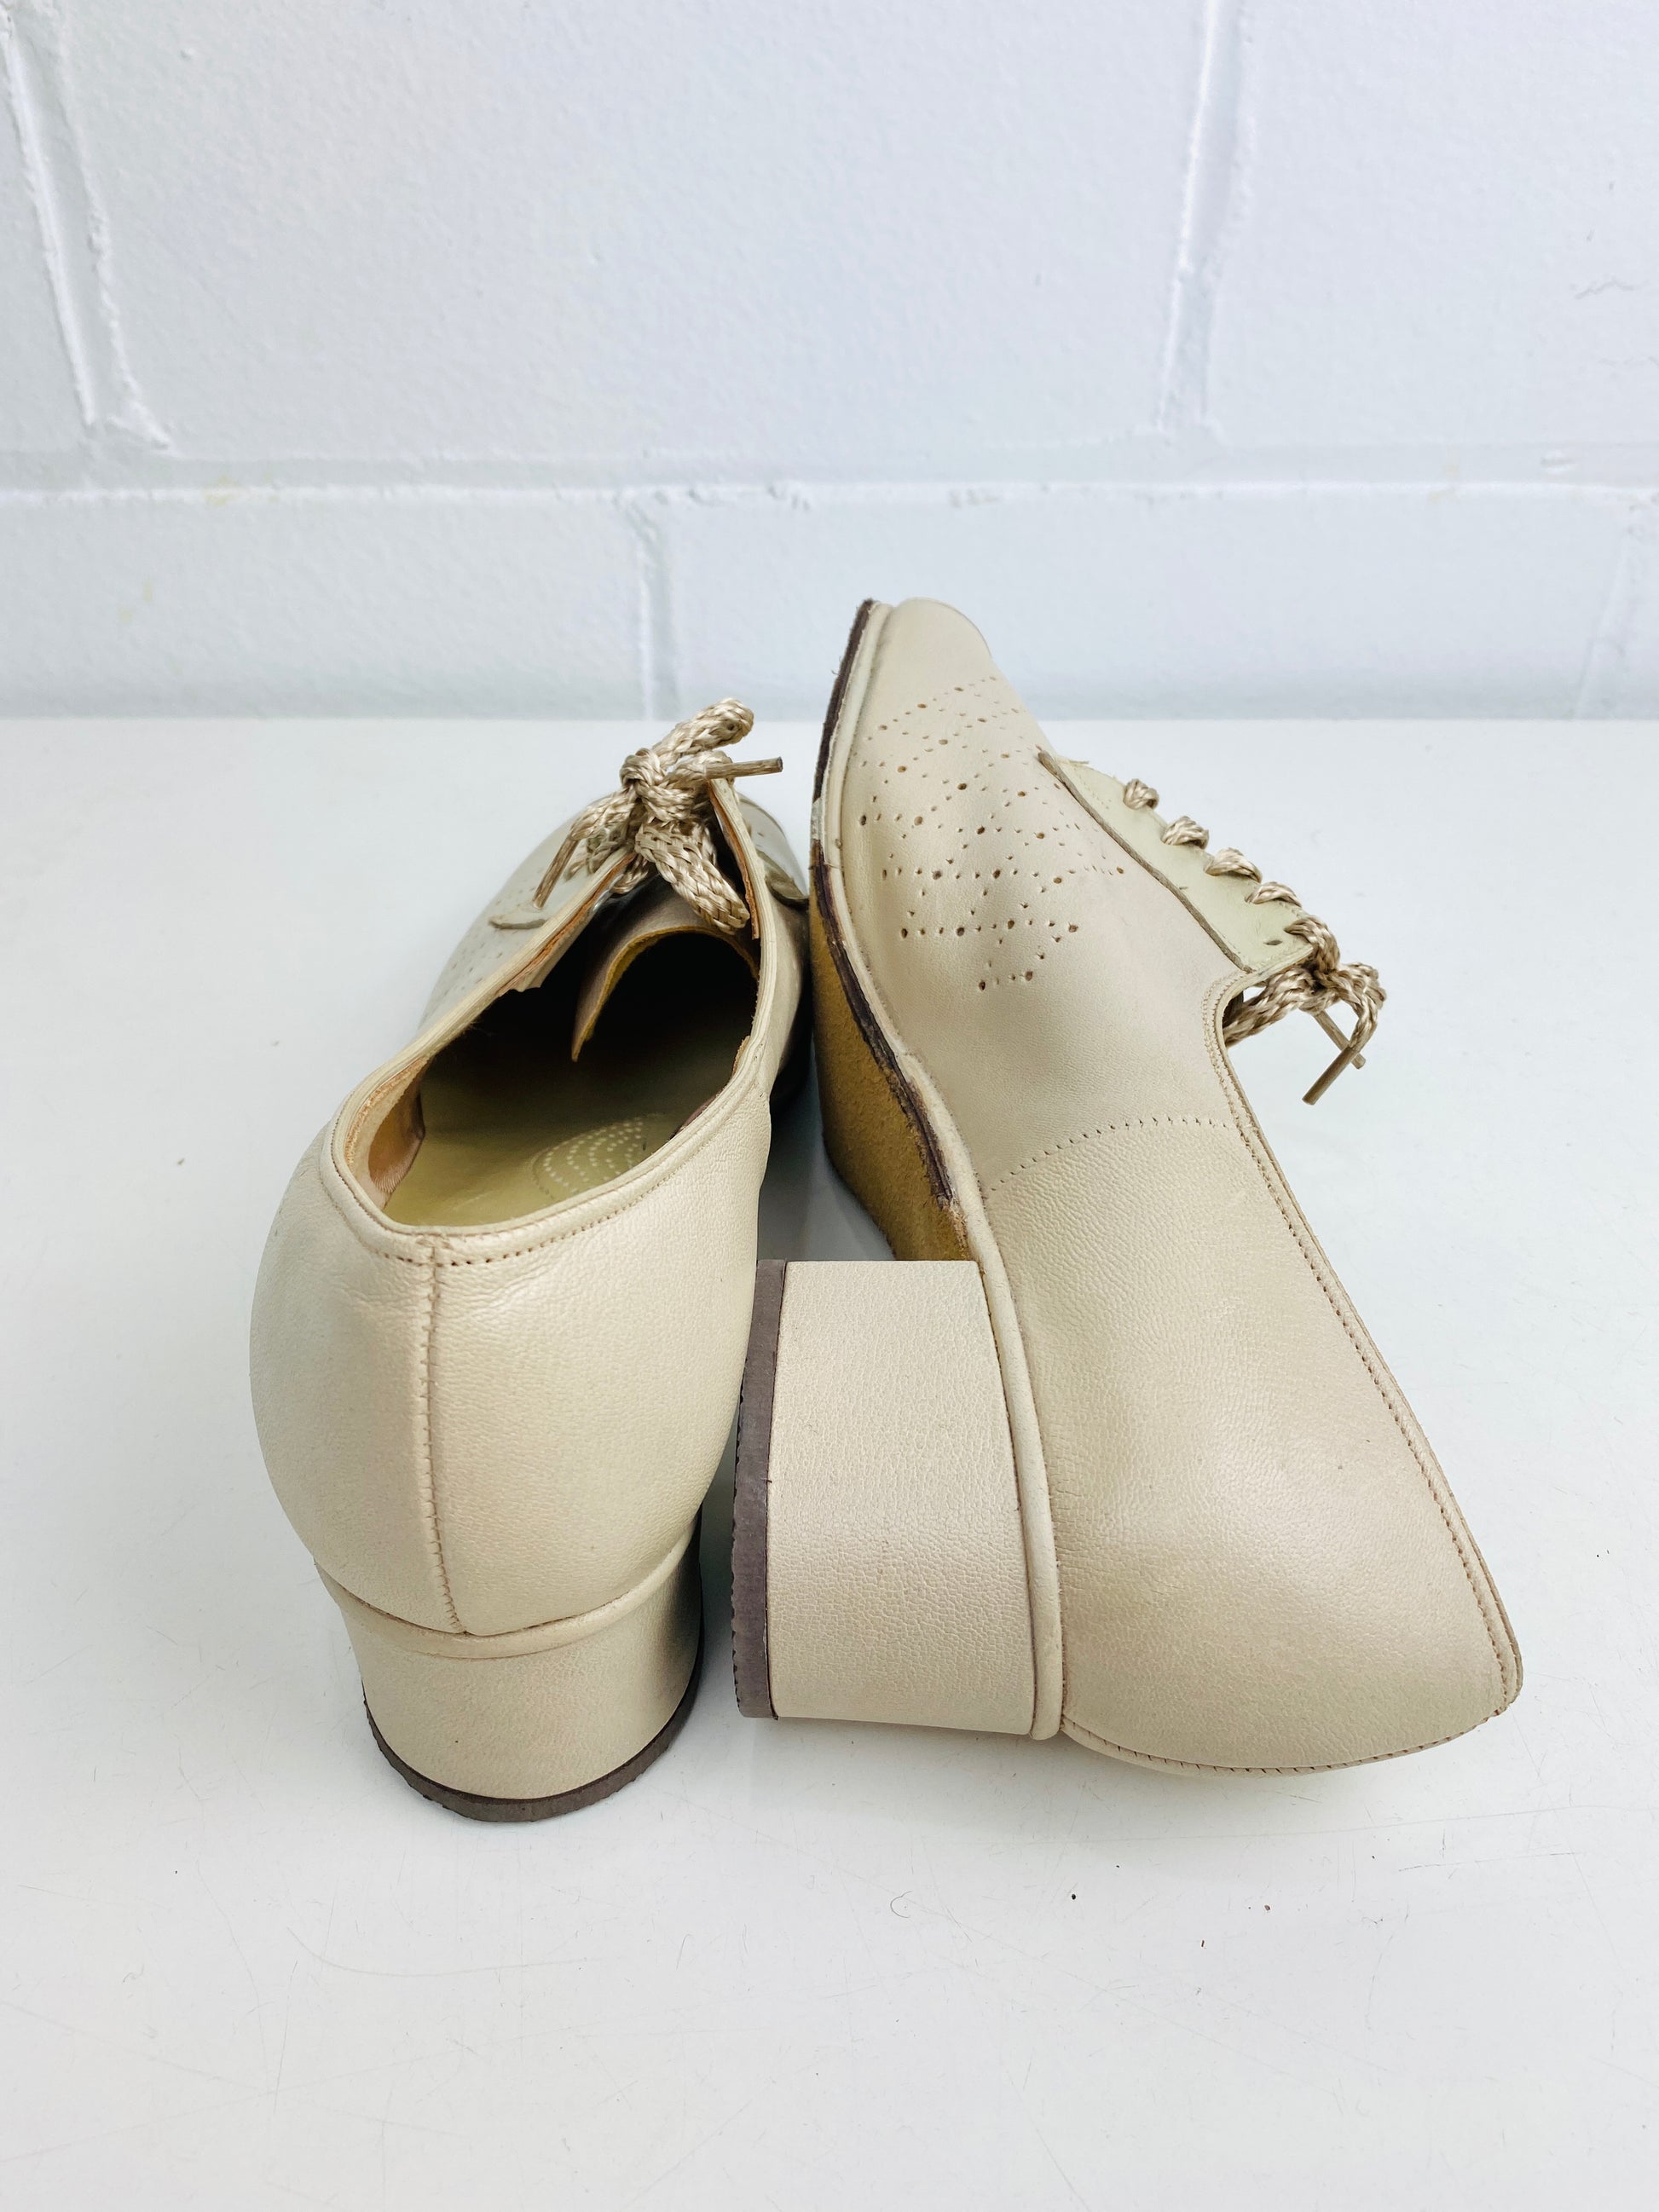 Vintage Deadstock Shoes, Women's 1980s Beige Leather Cuban Heel Oxfords, NOS, 1084